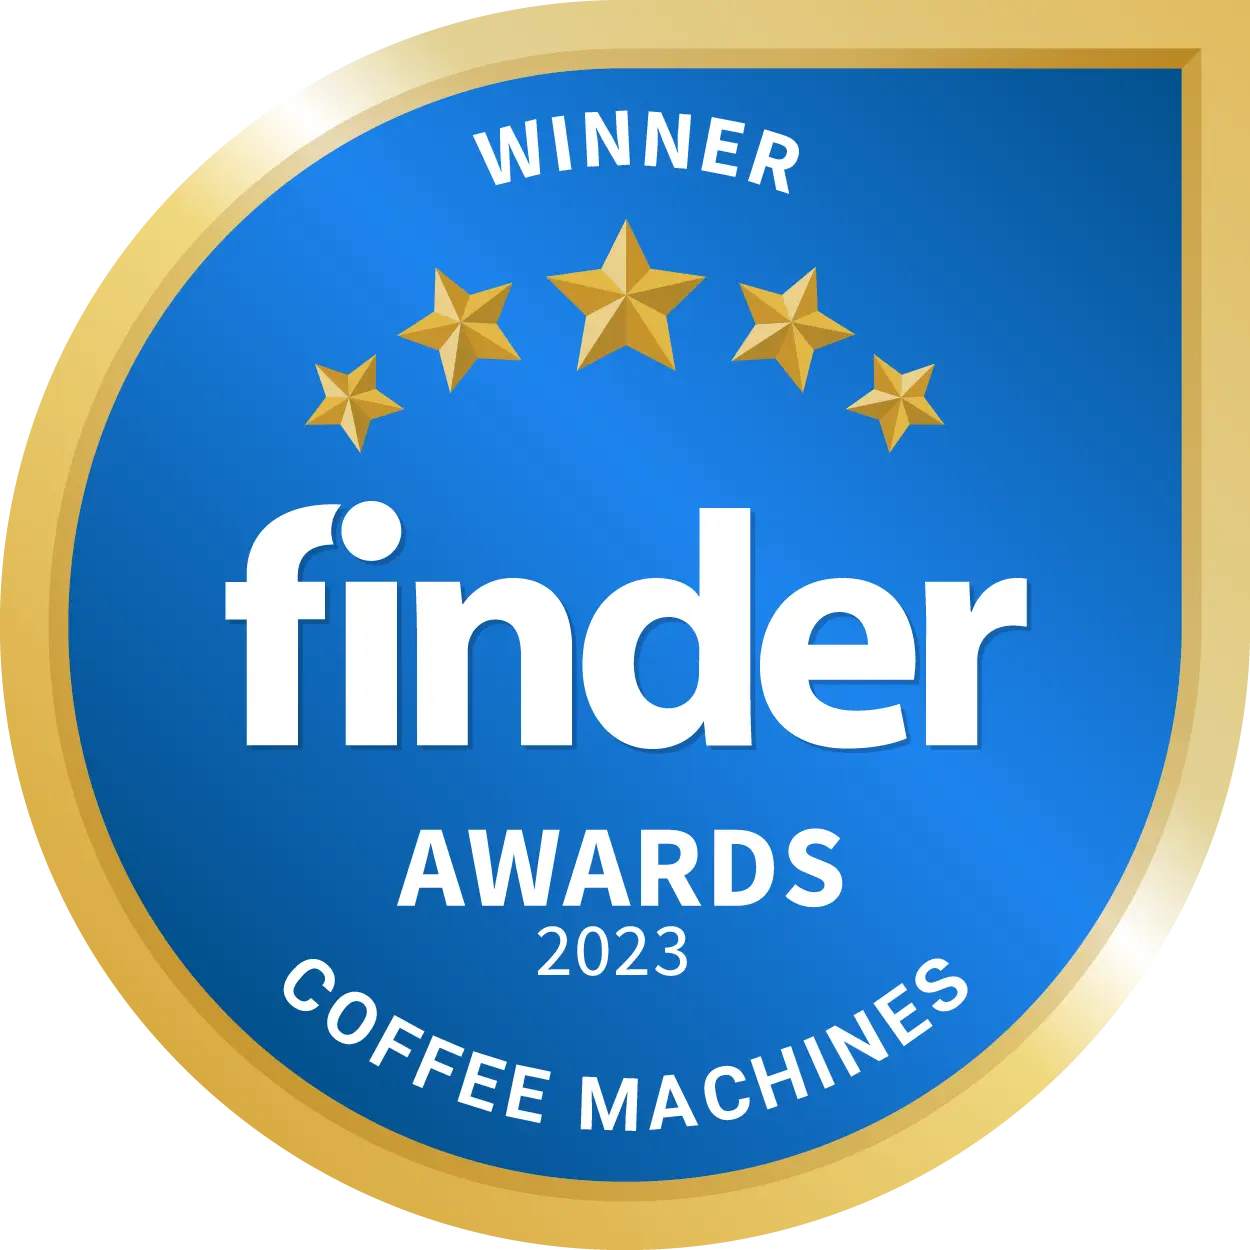 Best Coffee machine Brand 2023